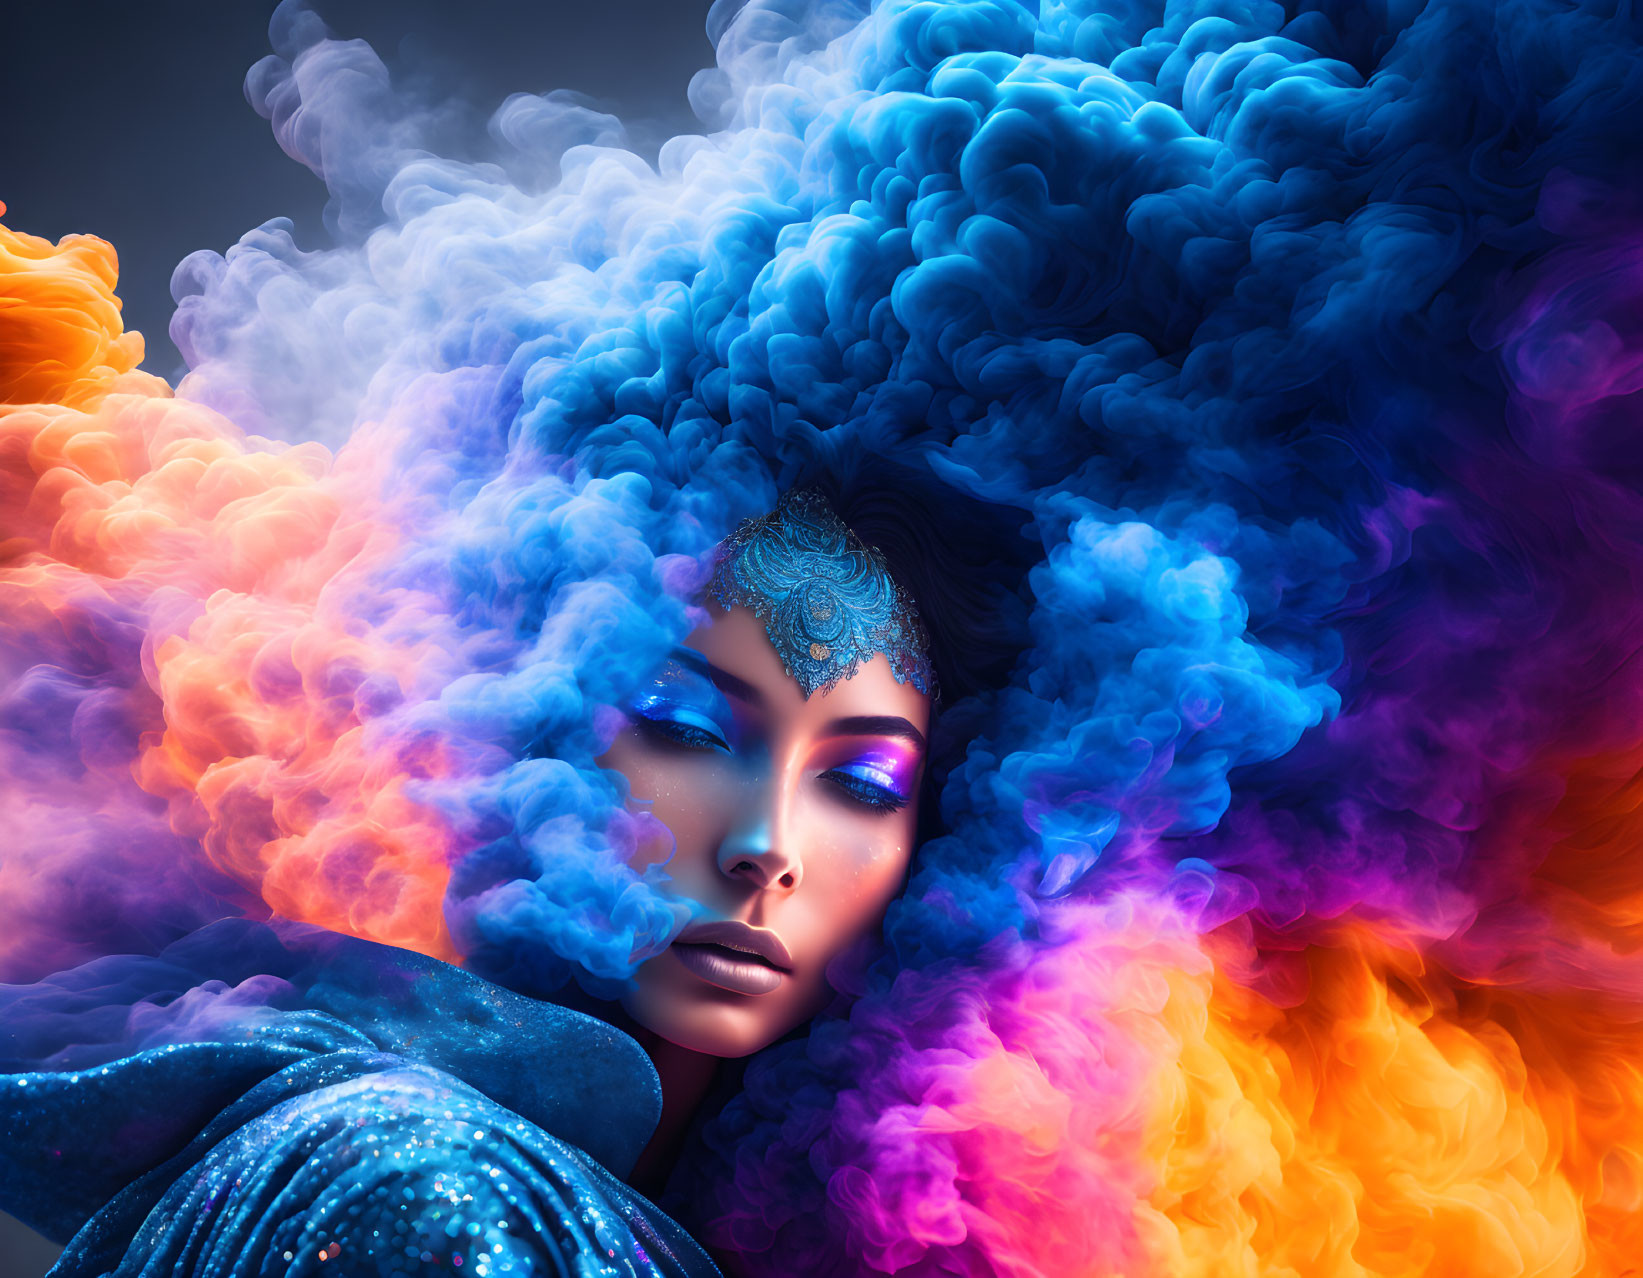 Vibrant multicolored smoke surrounds contemplative woman with ornate headpiece.